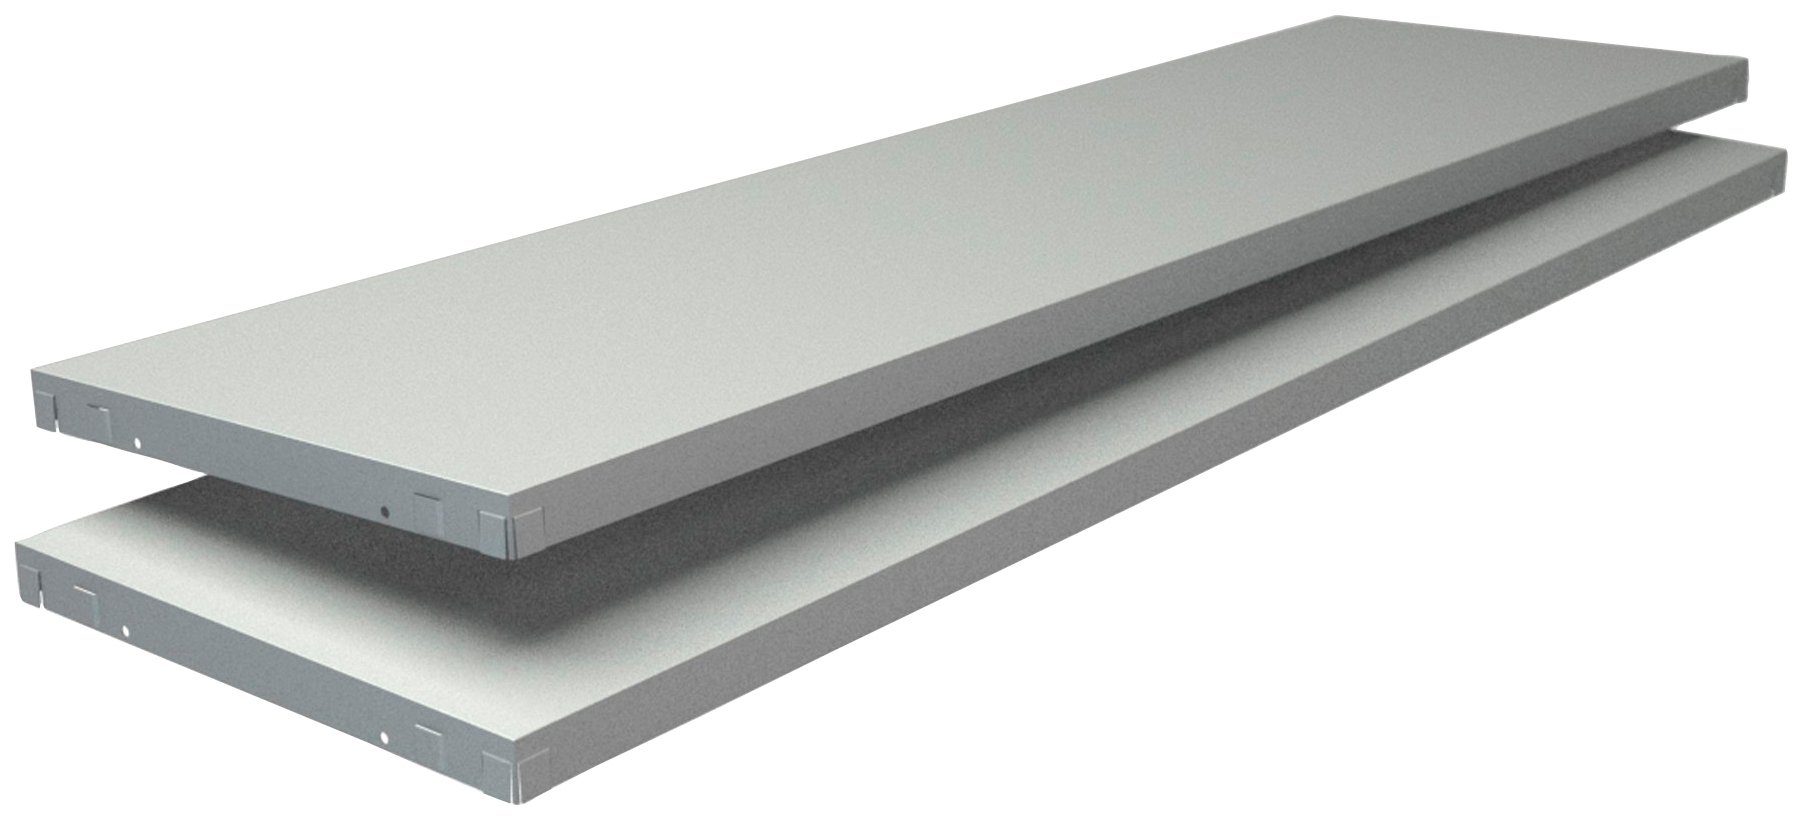 SCHULTE Regalwelt Regalelement Stecksystem-Fachboden PowerMax, 2 Stück weiß, 1200x350 mm | Regalsysteme